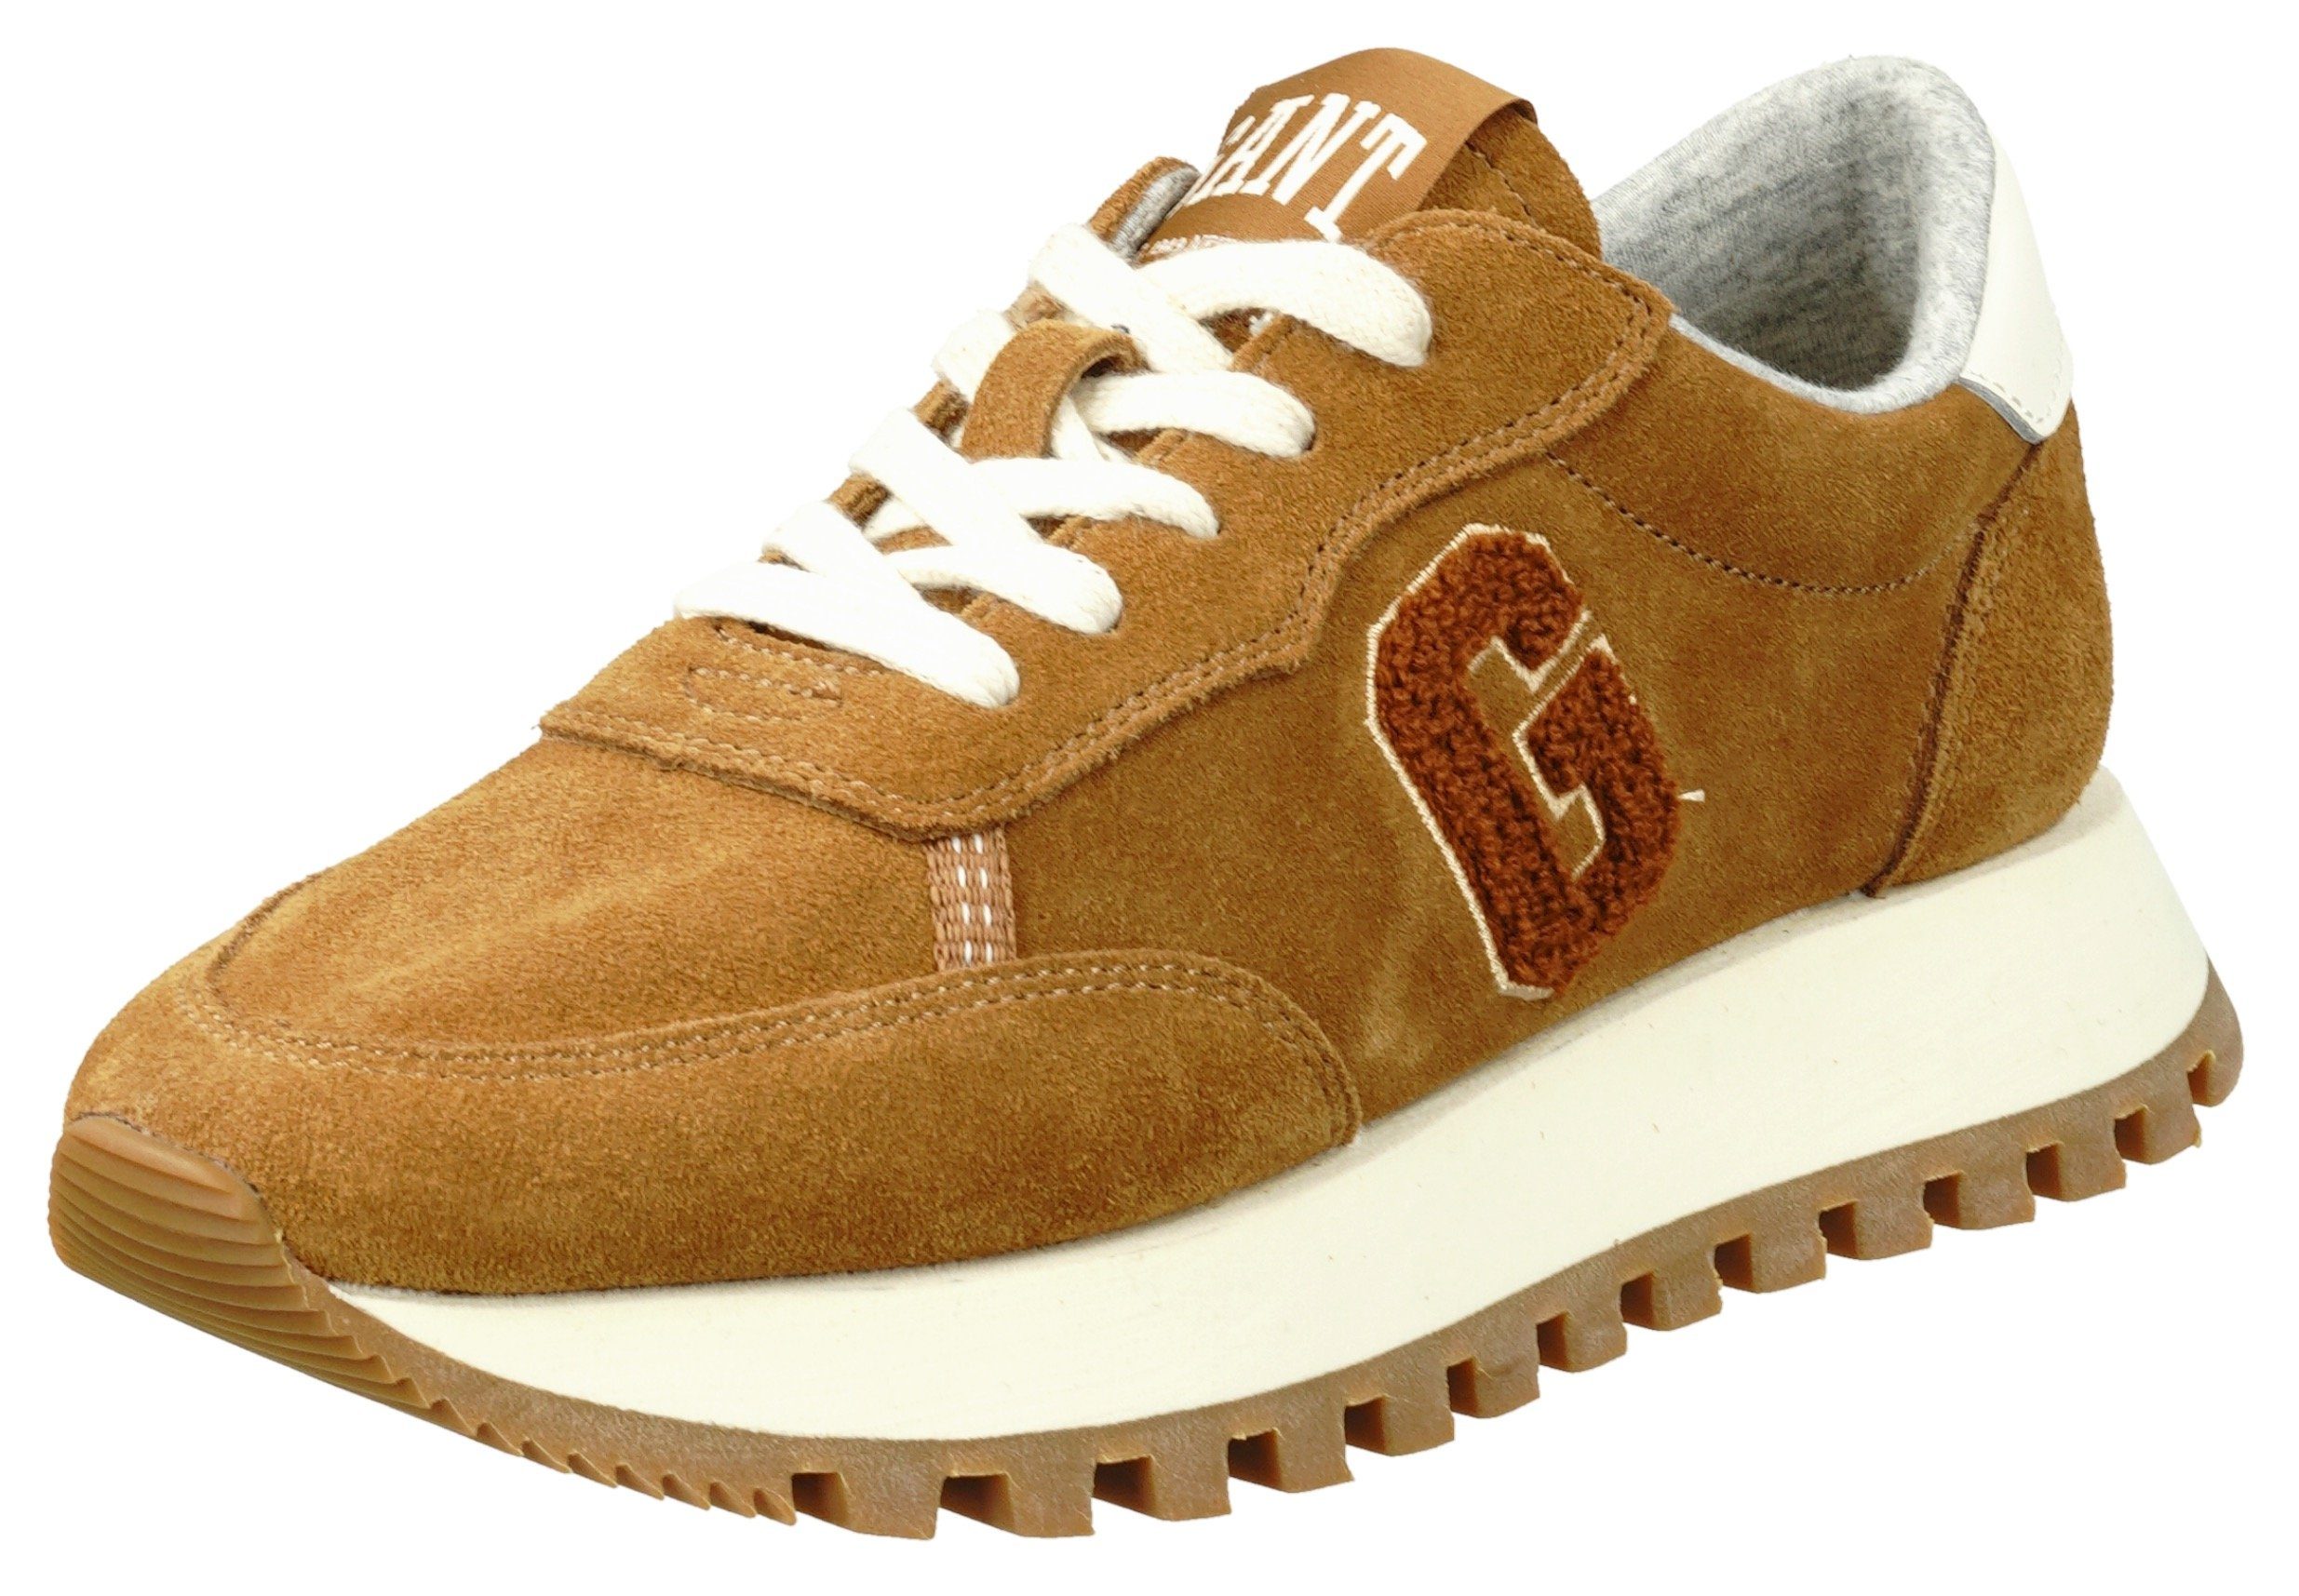 Gant Gold-Braun Logoverzierung Sneaker mit CAFFAY